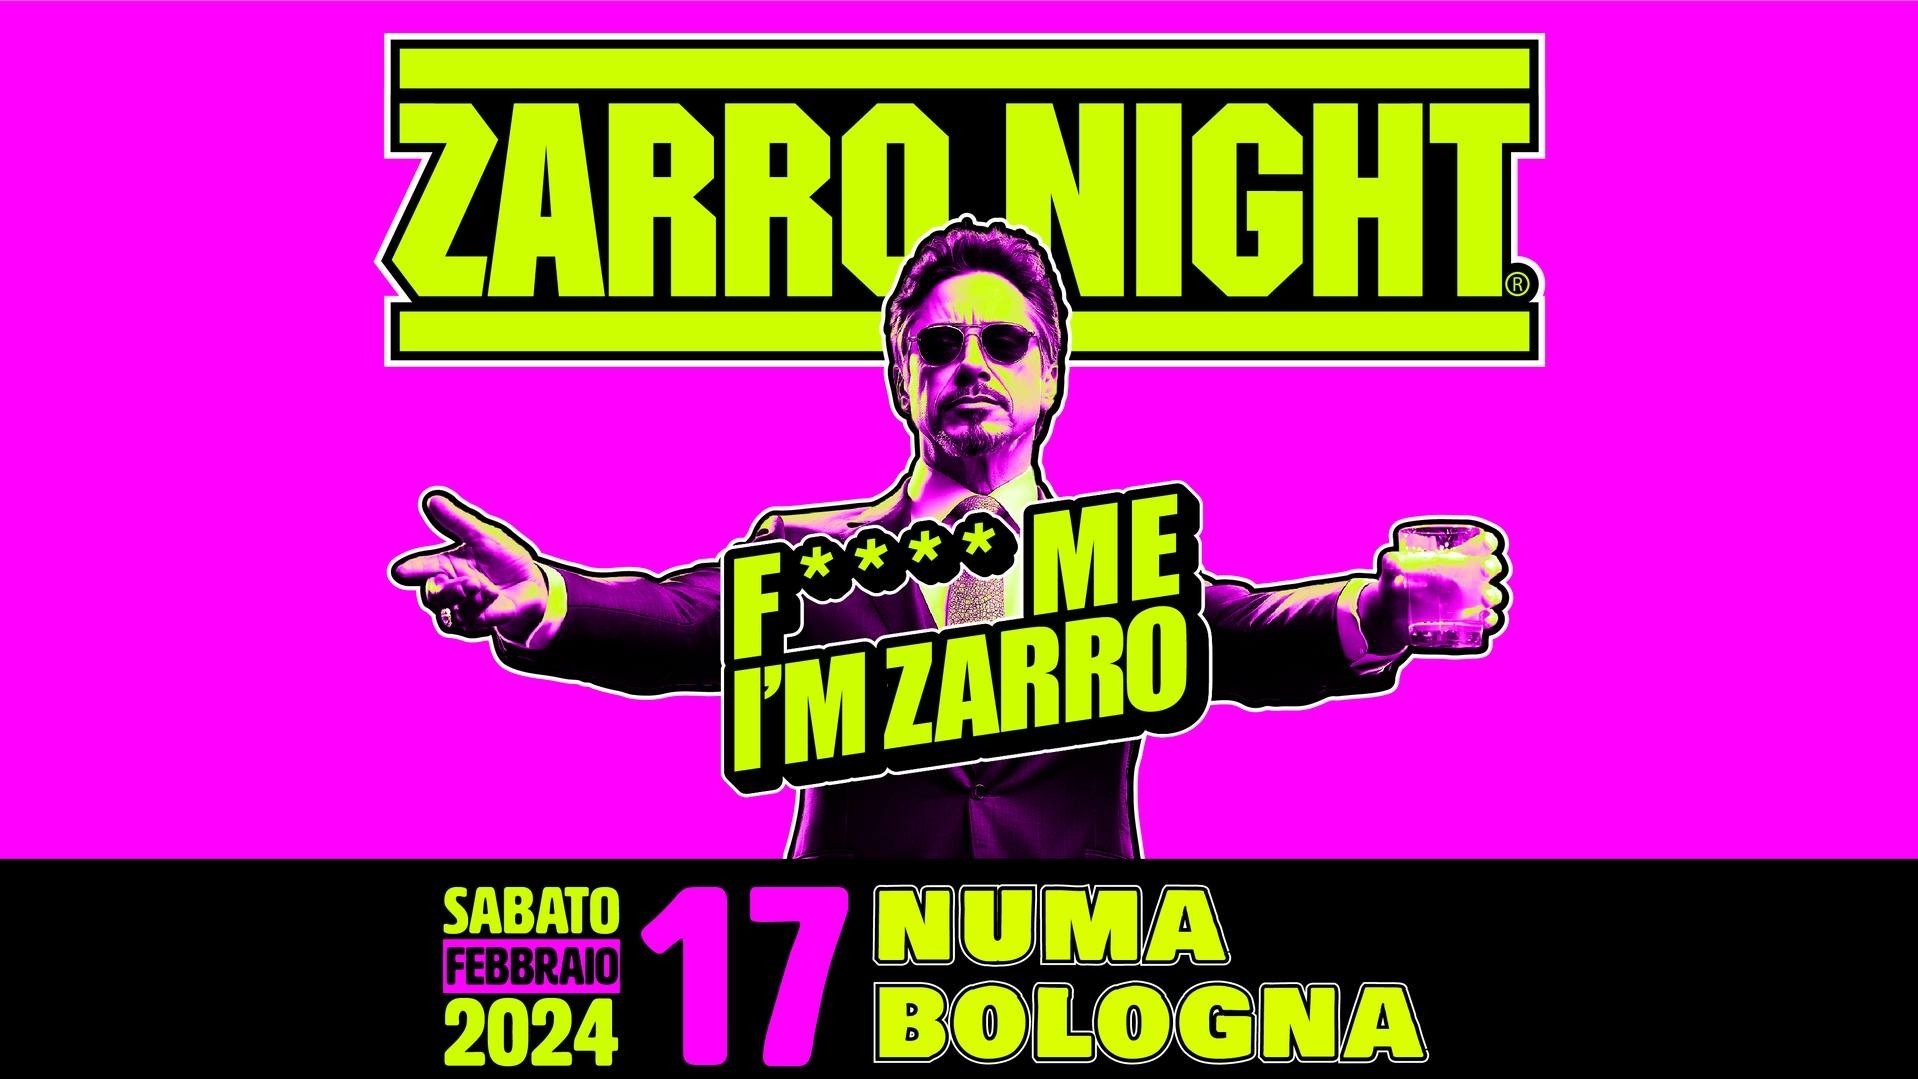 Zarro Night®